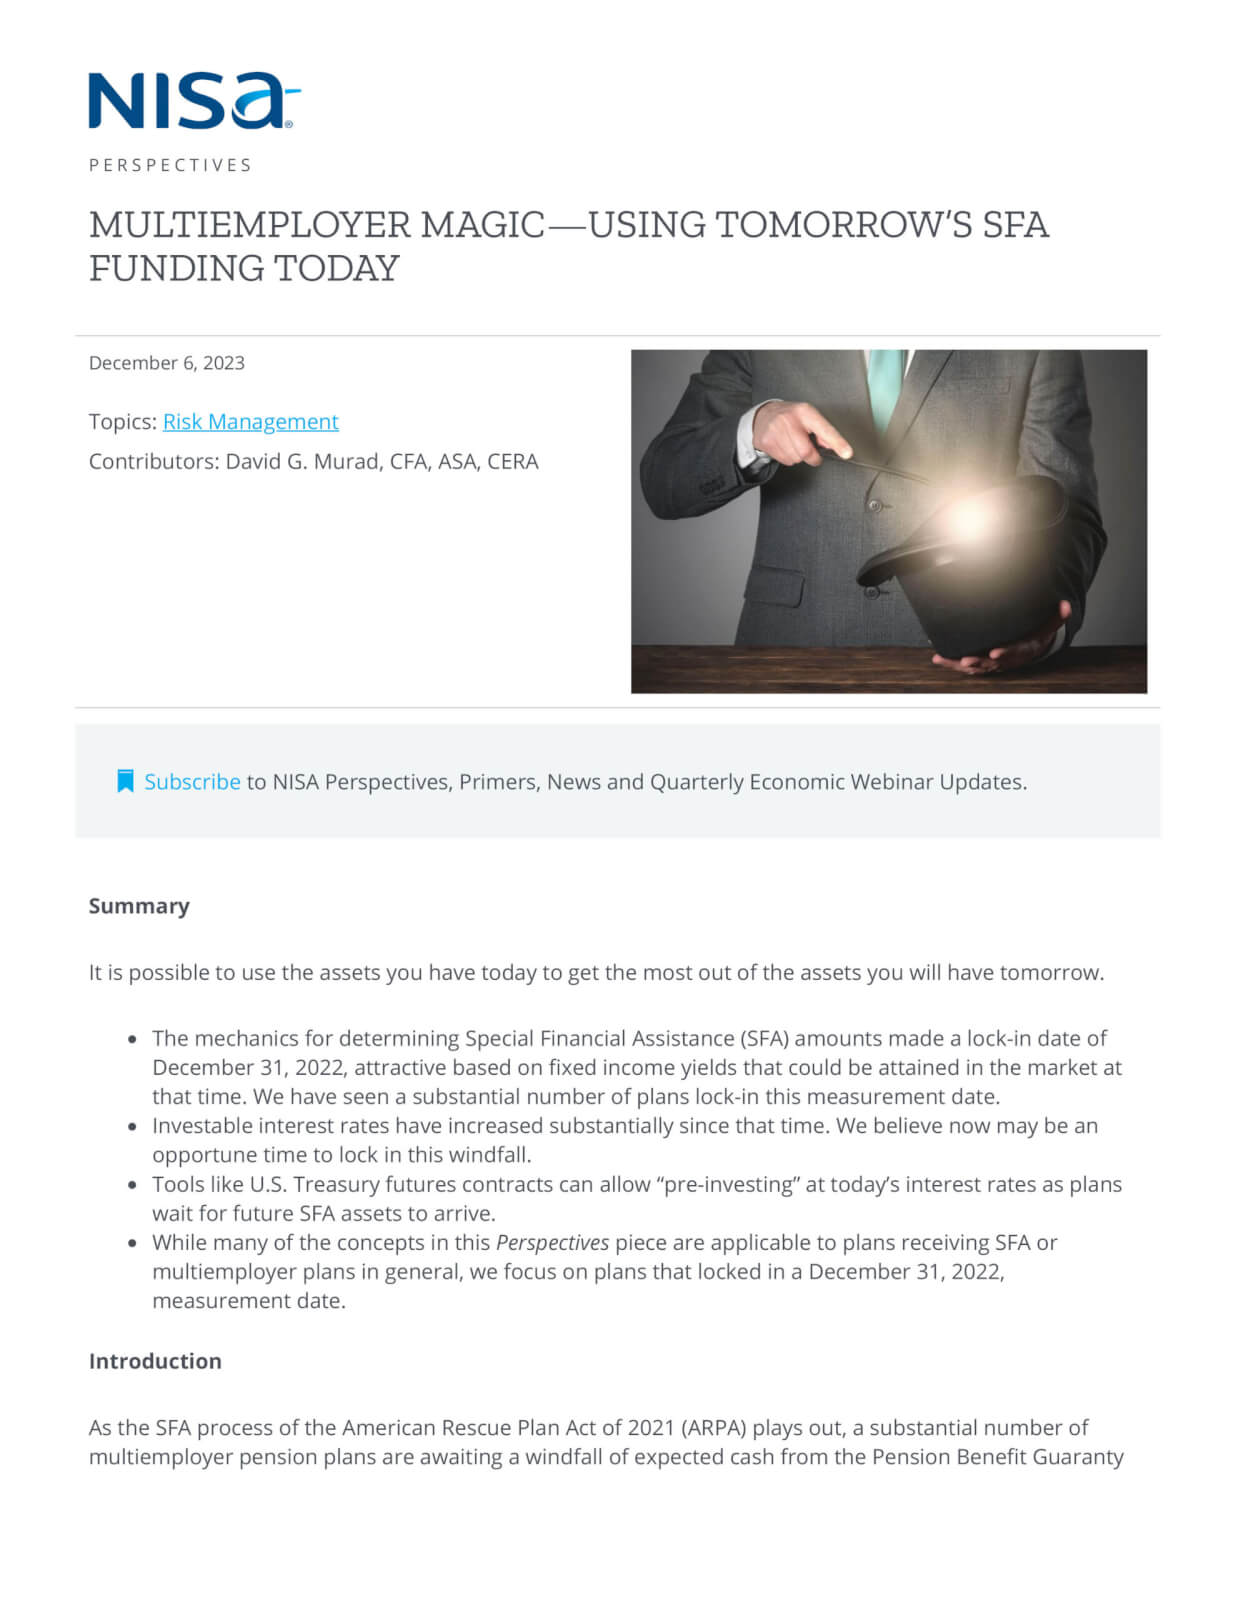 Multiemployer Magic—Using Tomorrow’s SFA Funding Today